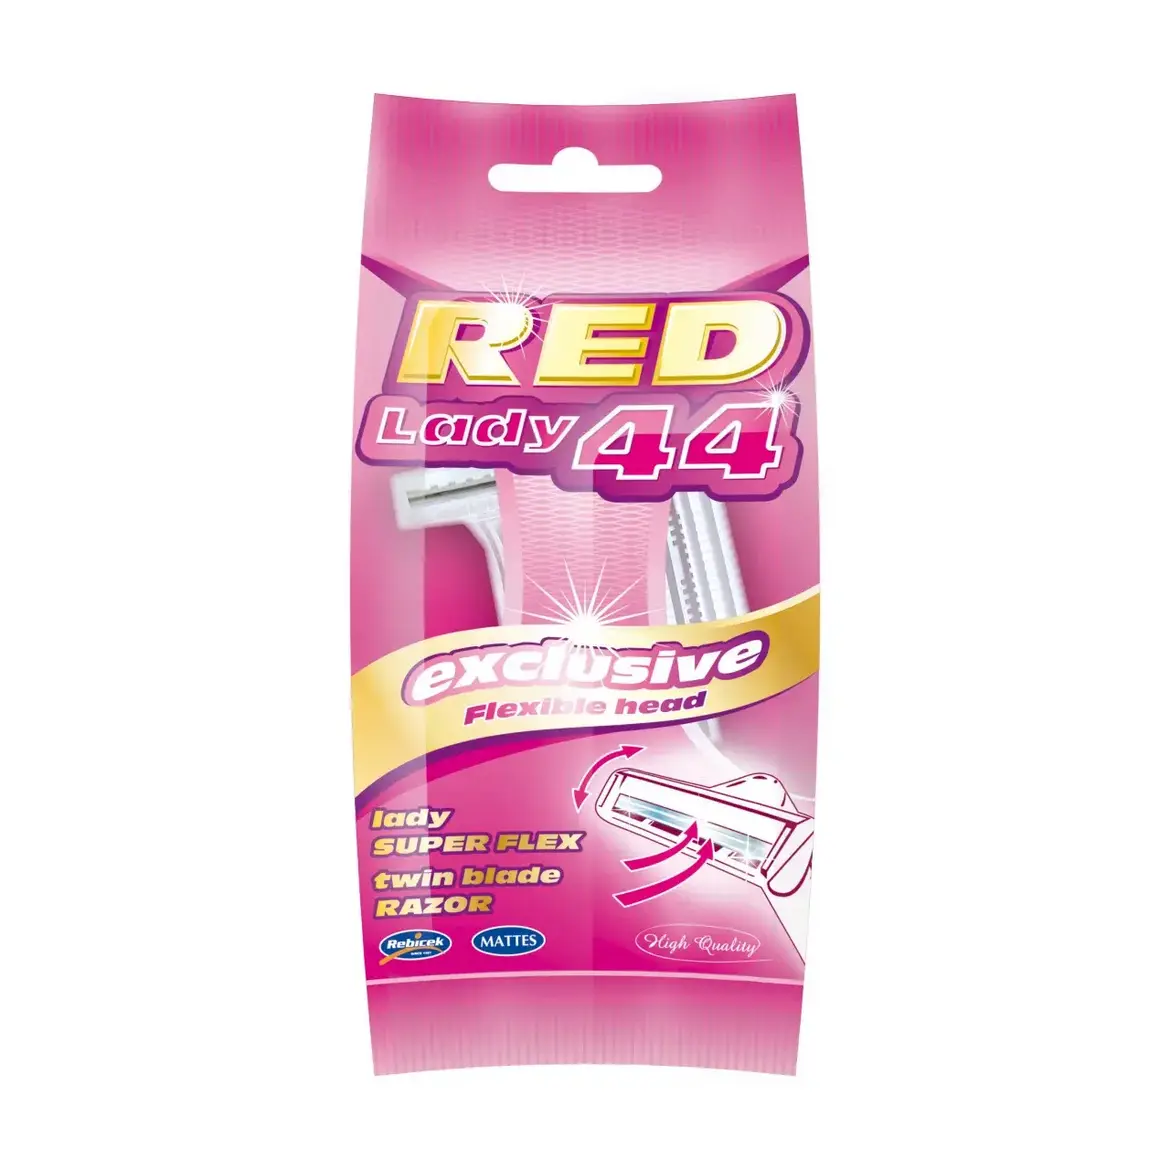 Red 44 mozgófejes 2 élű női borotva